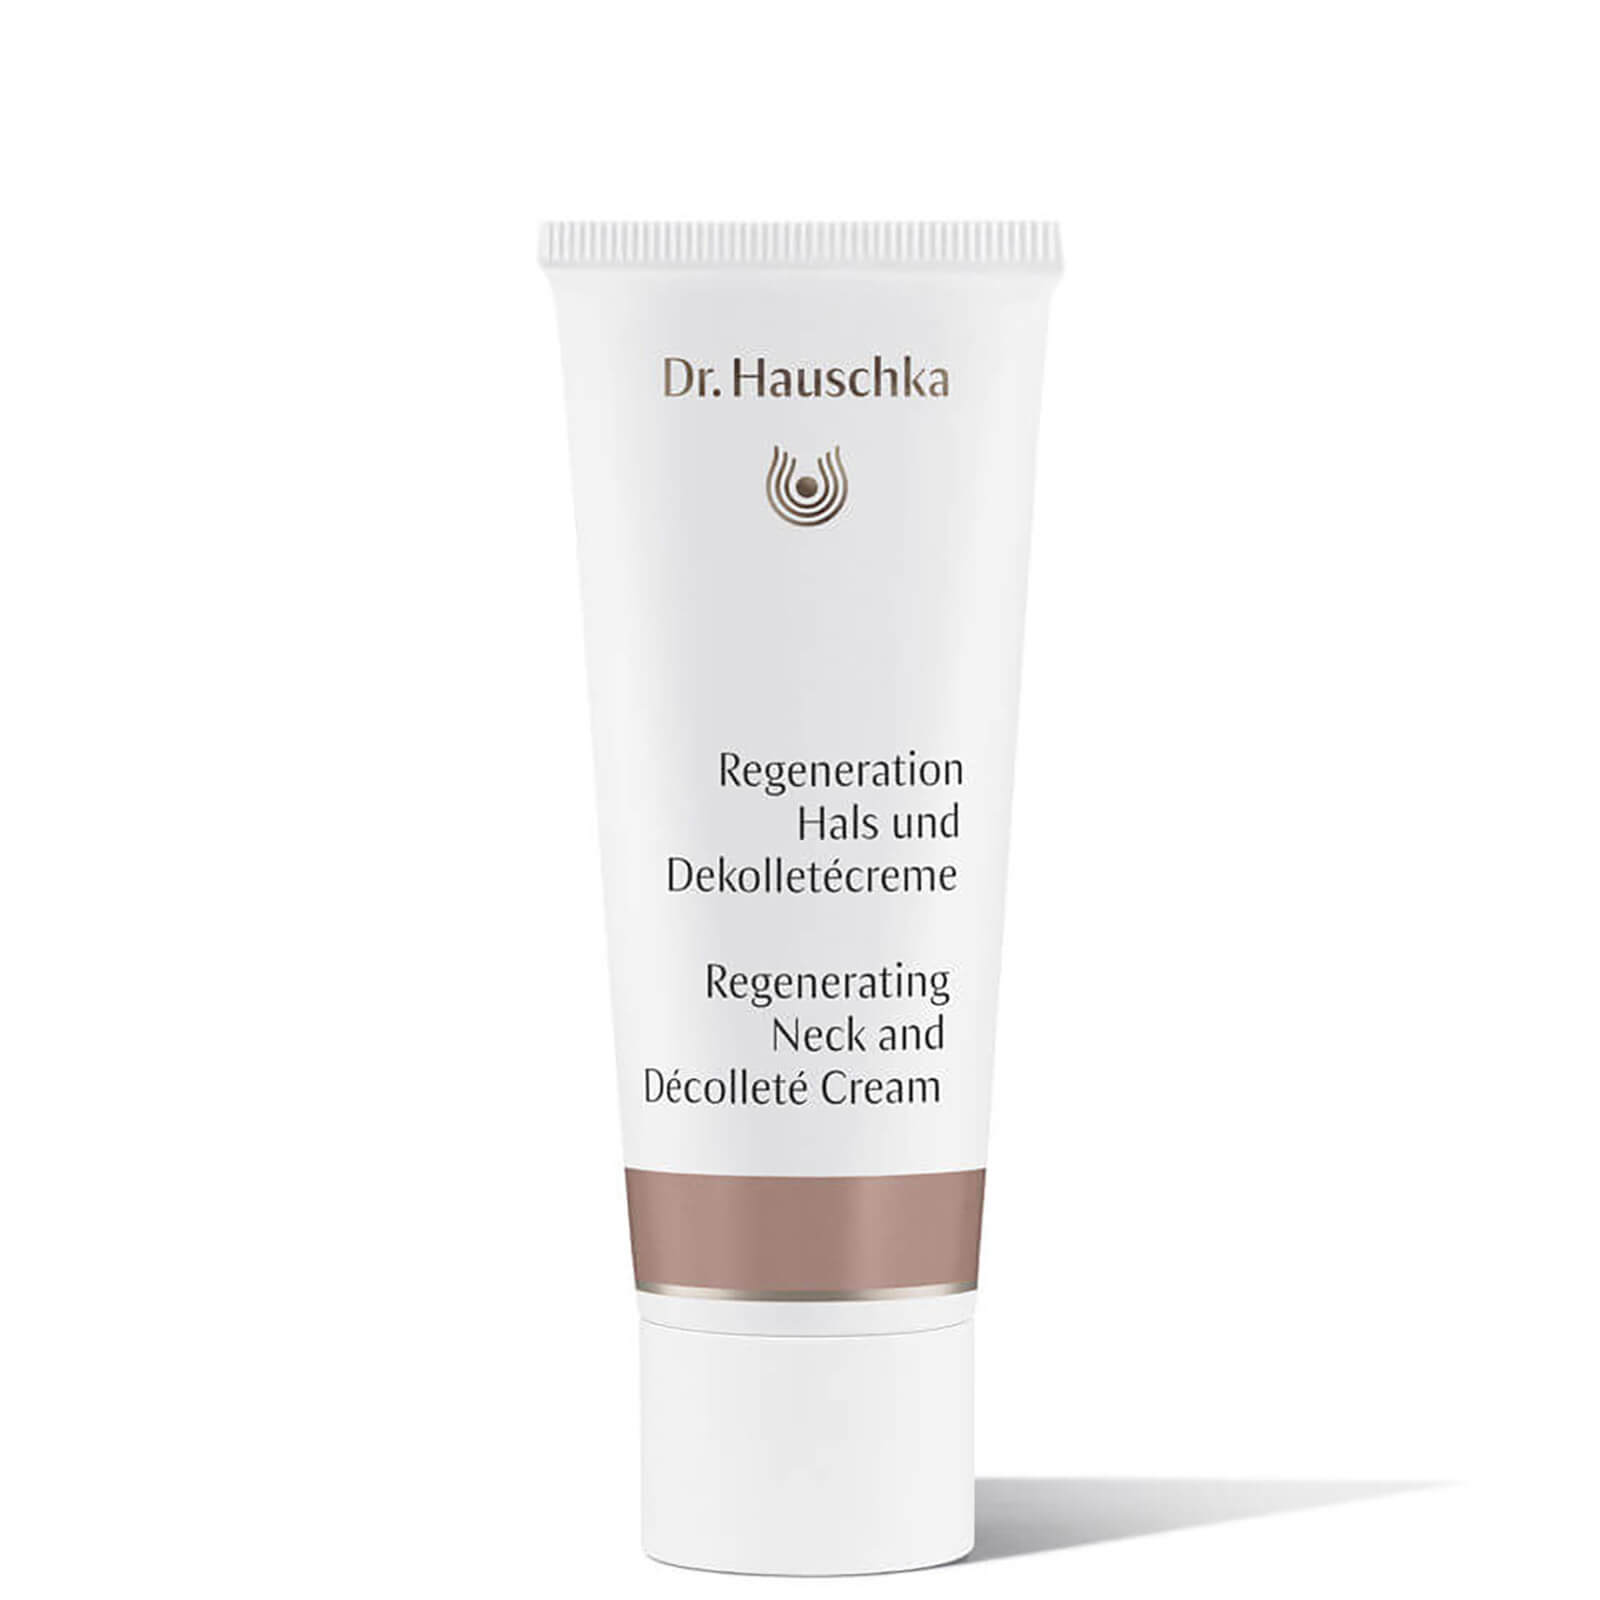 Dr. Hauschka Regenerating Neck and Decollete Cream 40ml